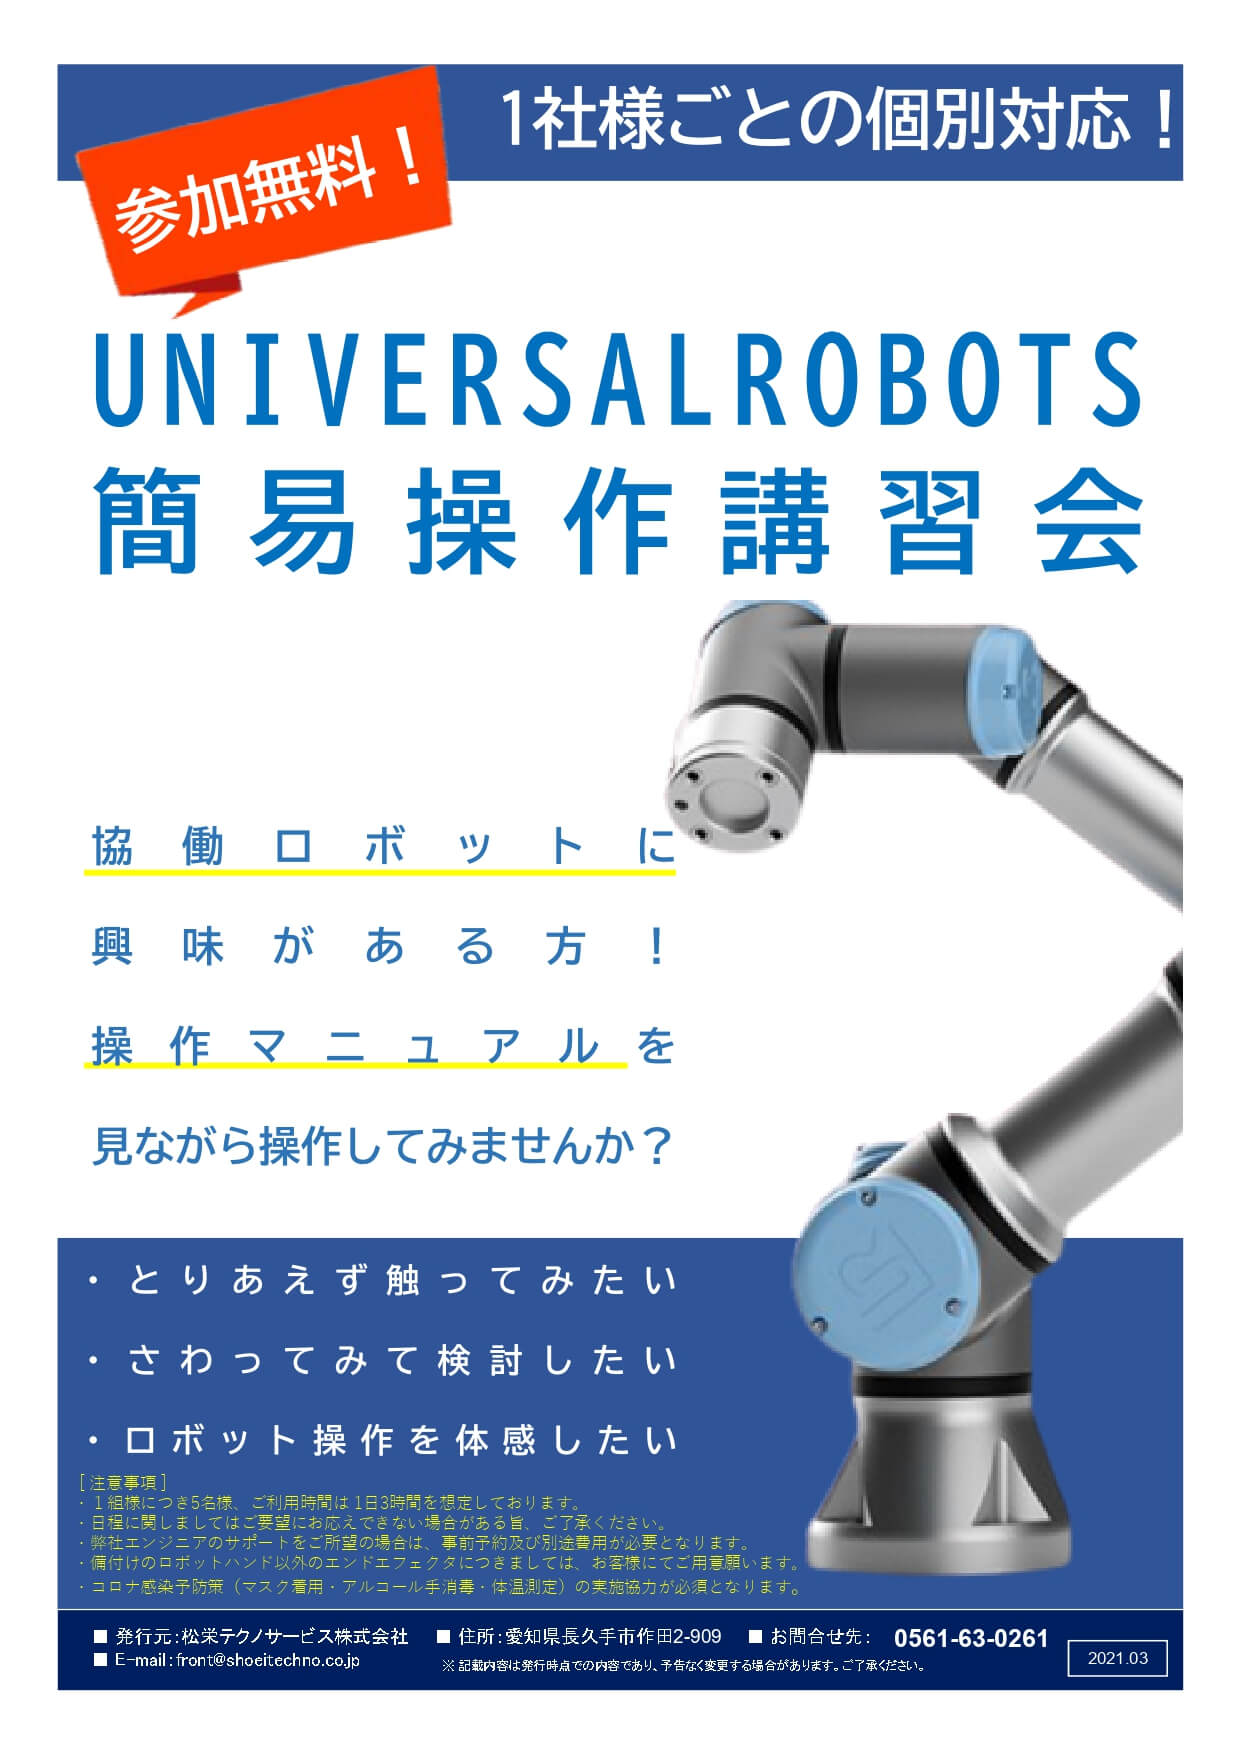 UNIVERSALROBOTS　無料簡易操作講習会開催のお知らせ